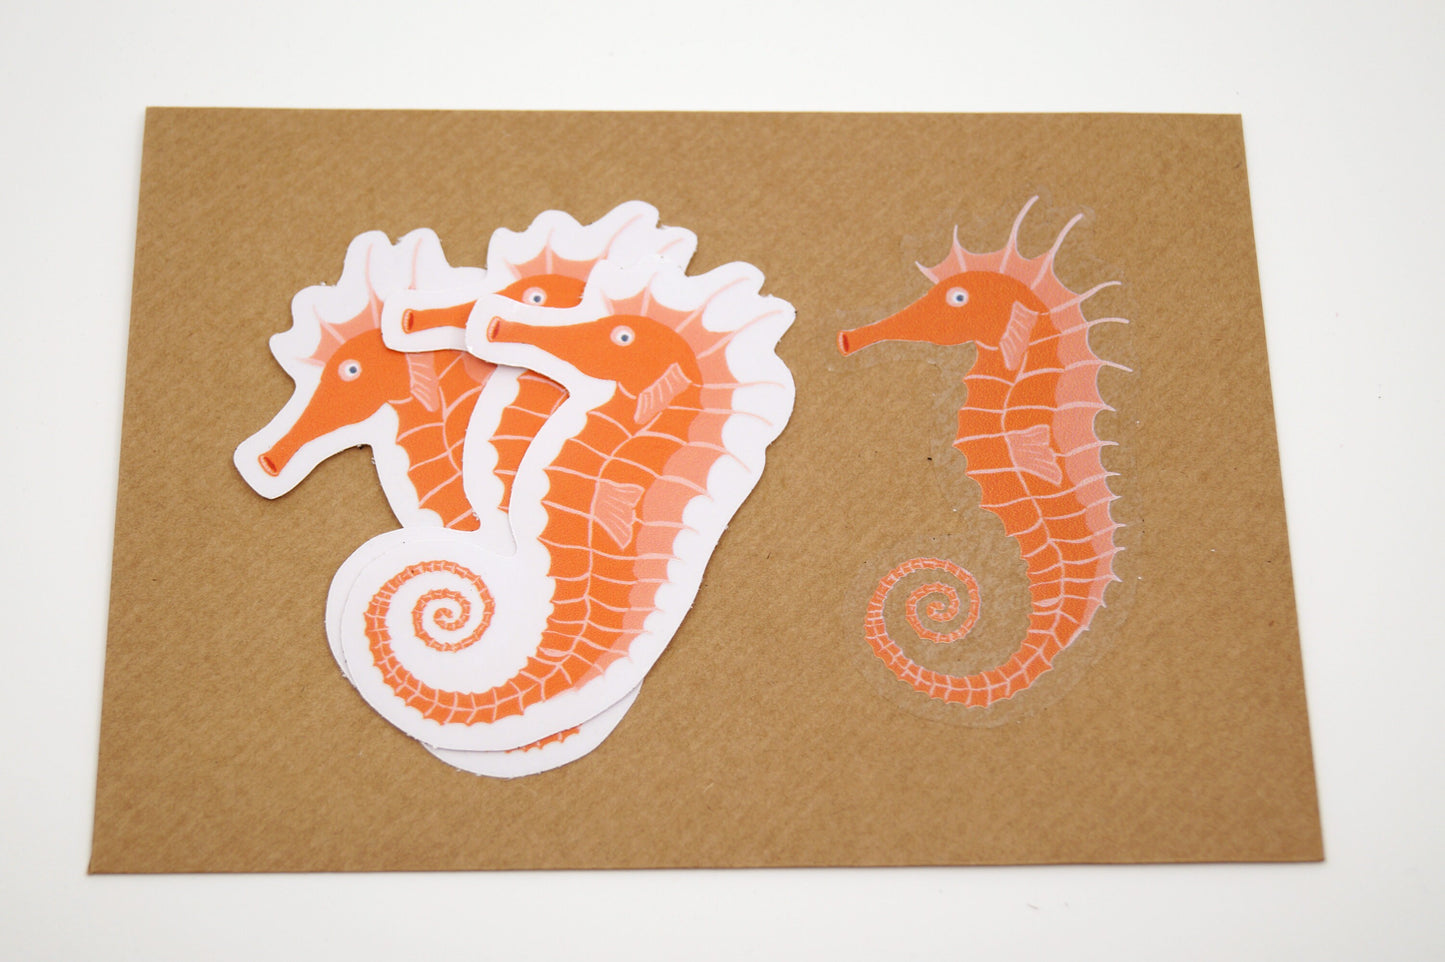 Sticker 3 pieces seahorse, transparent sticker, 8x5cm